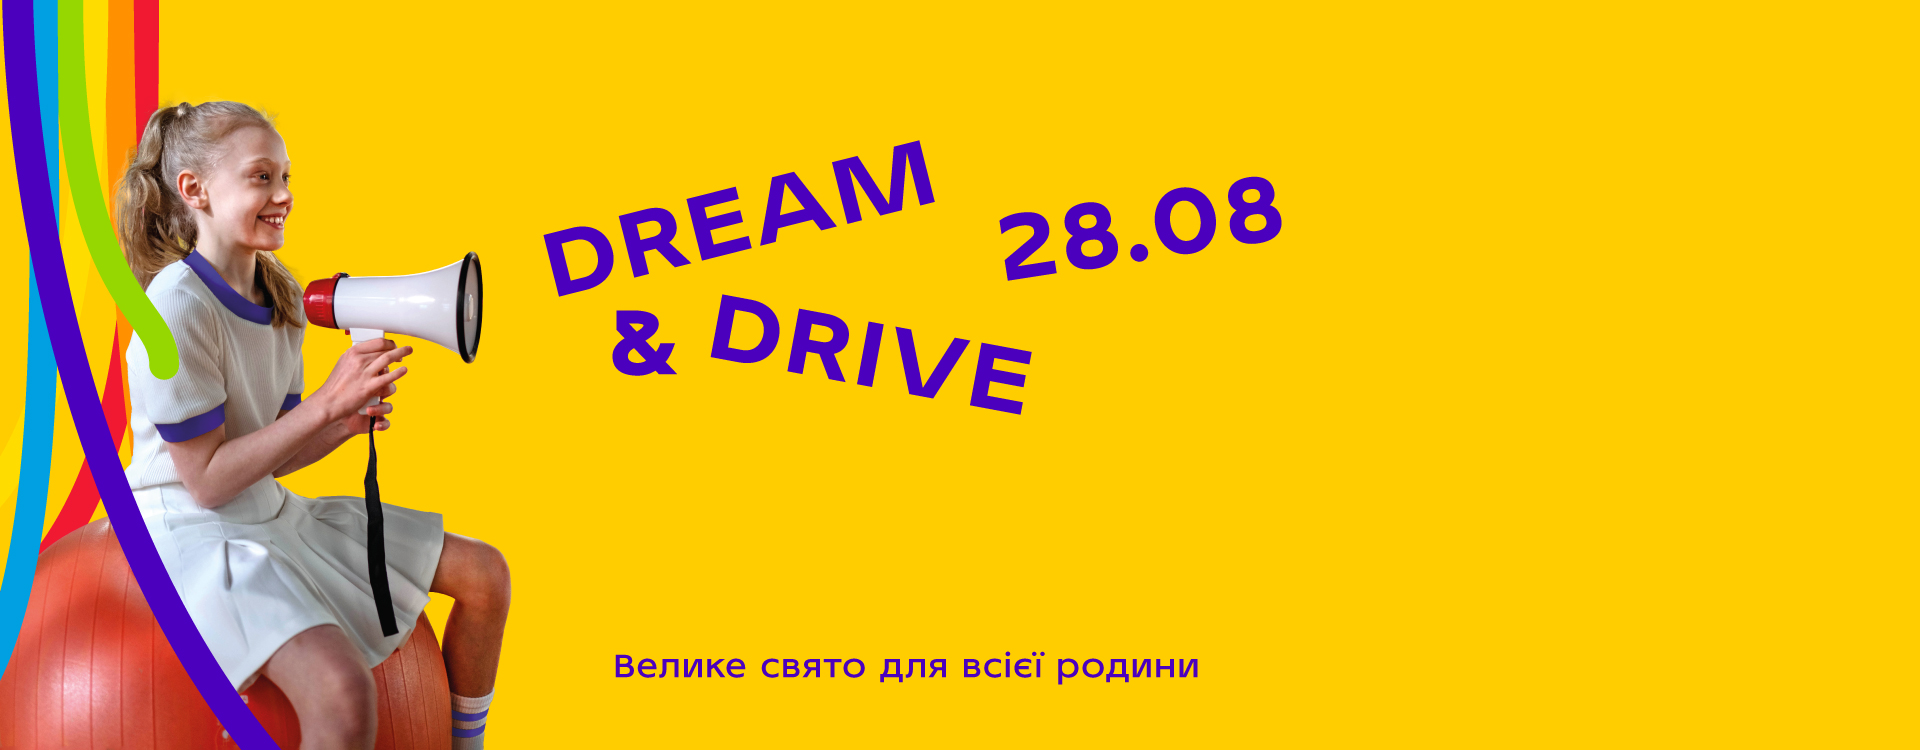 DREAM&DRIVE
28.08